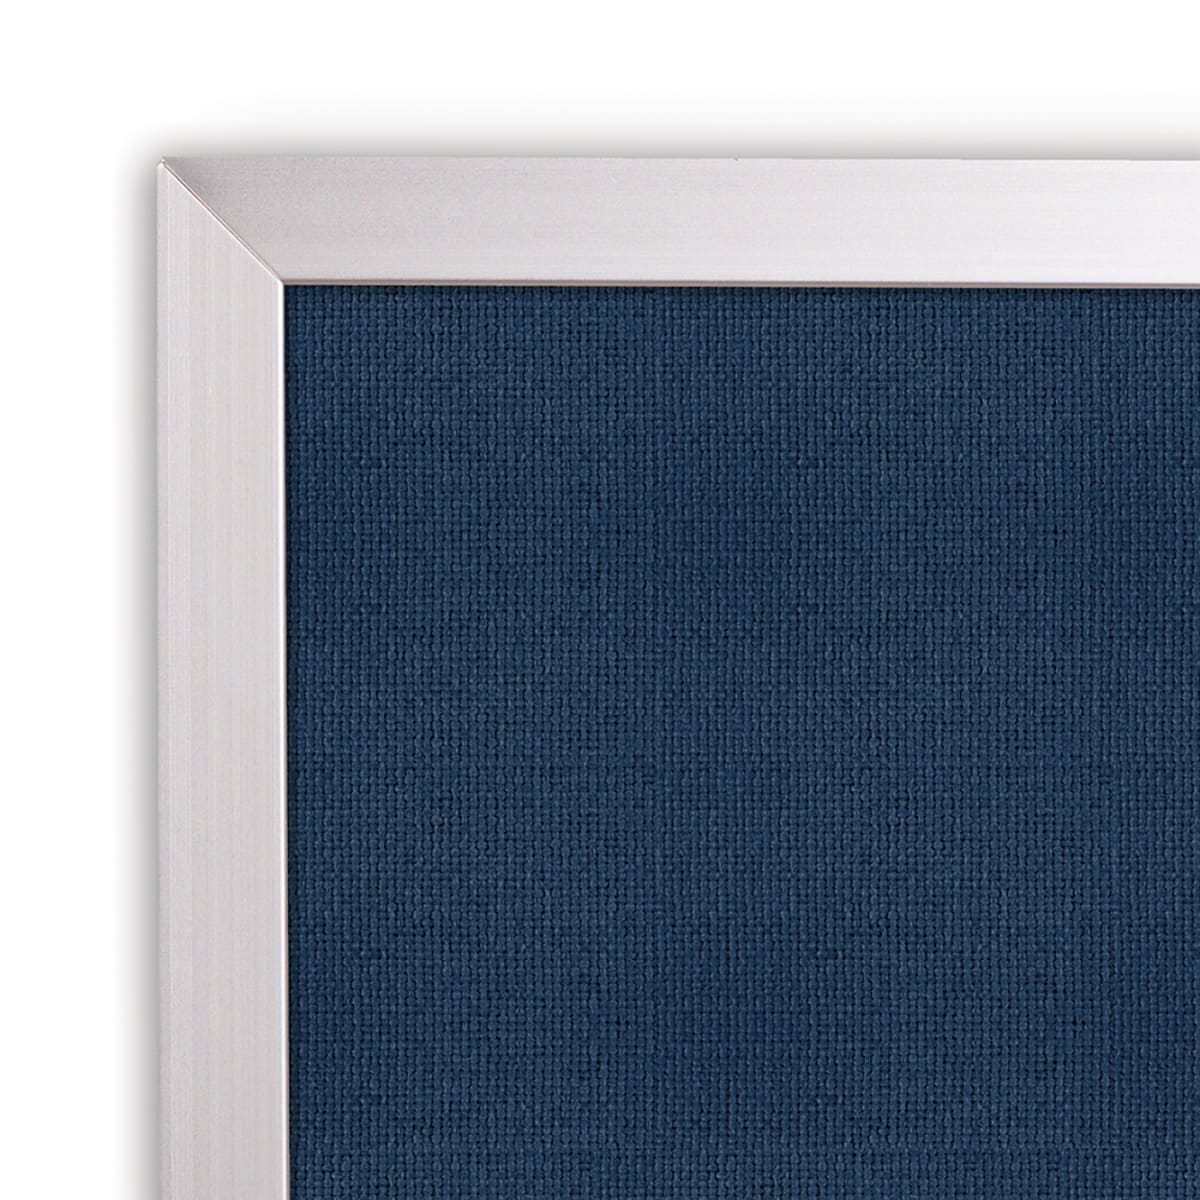 Mooreco Fabric Cork - Plate Tackboard - Aluminum Trim - 4'H x 5'W (MOR-333AF) - SchoolOutlet